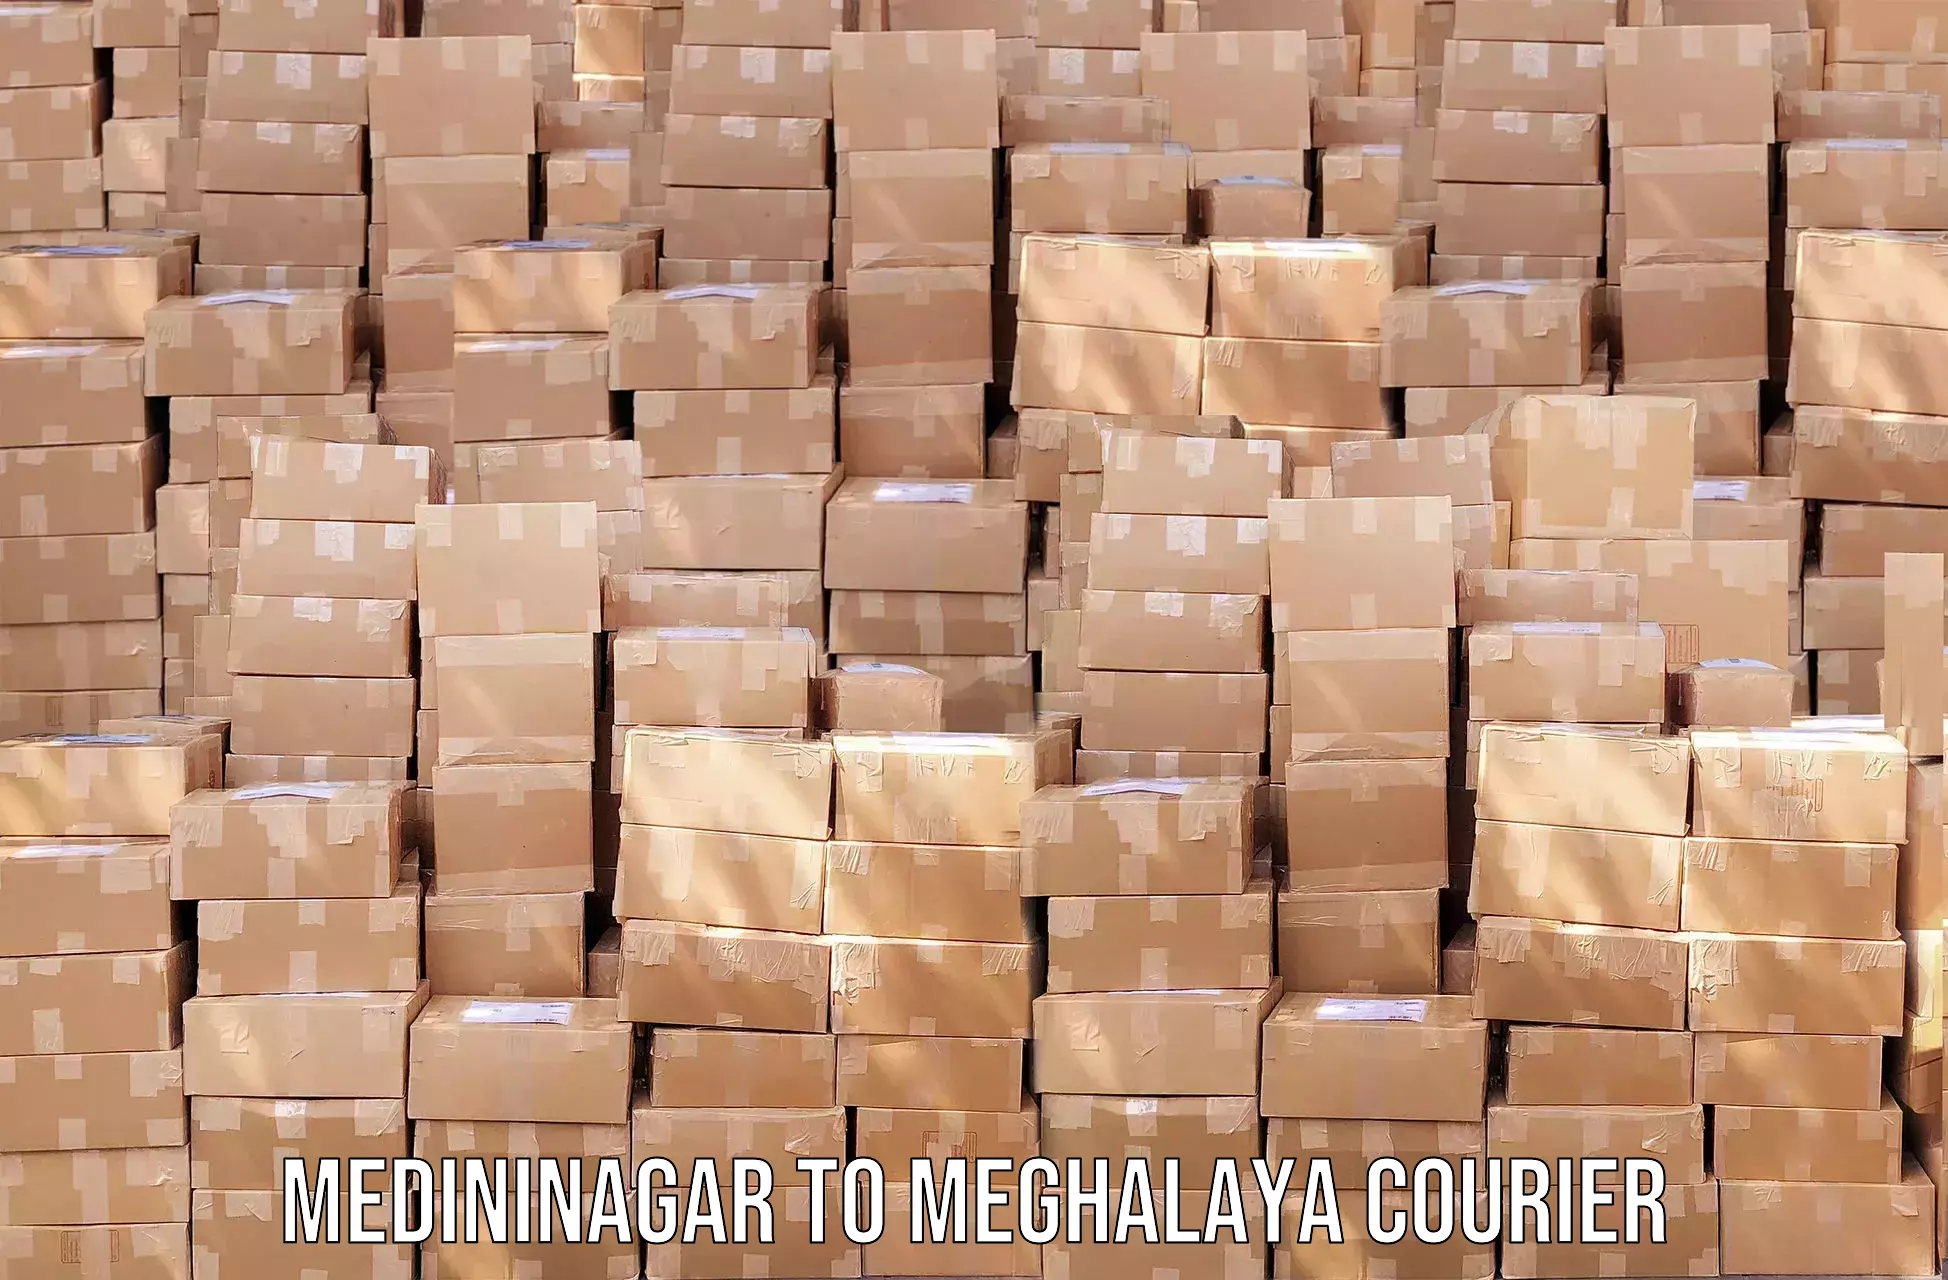 Courier service efficiency Medininagar to Meghalaya